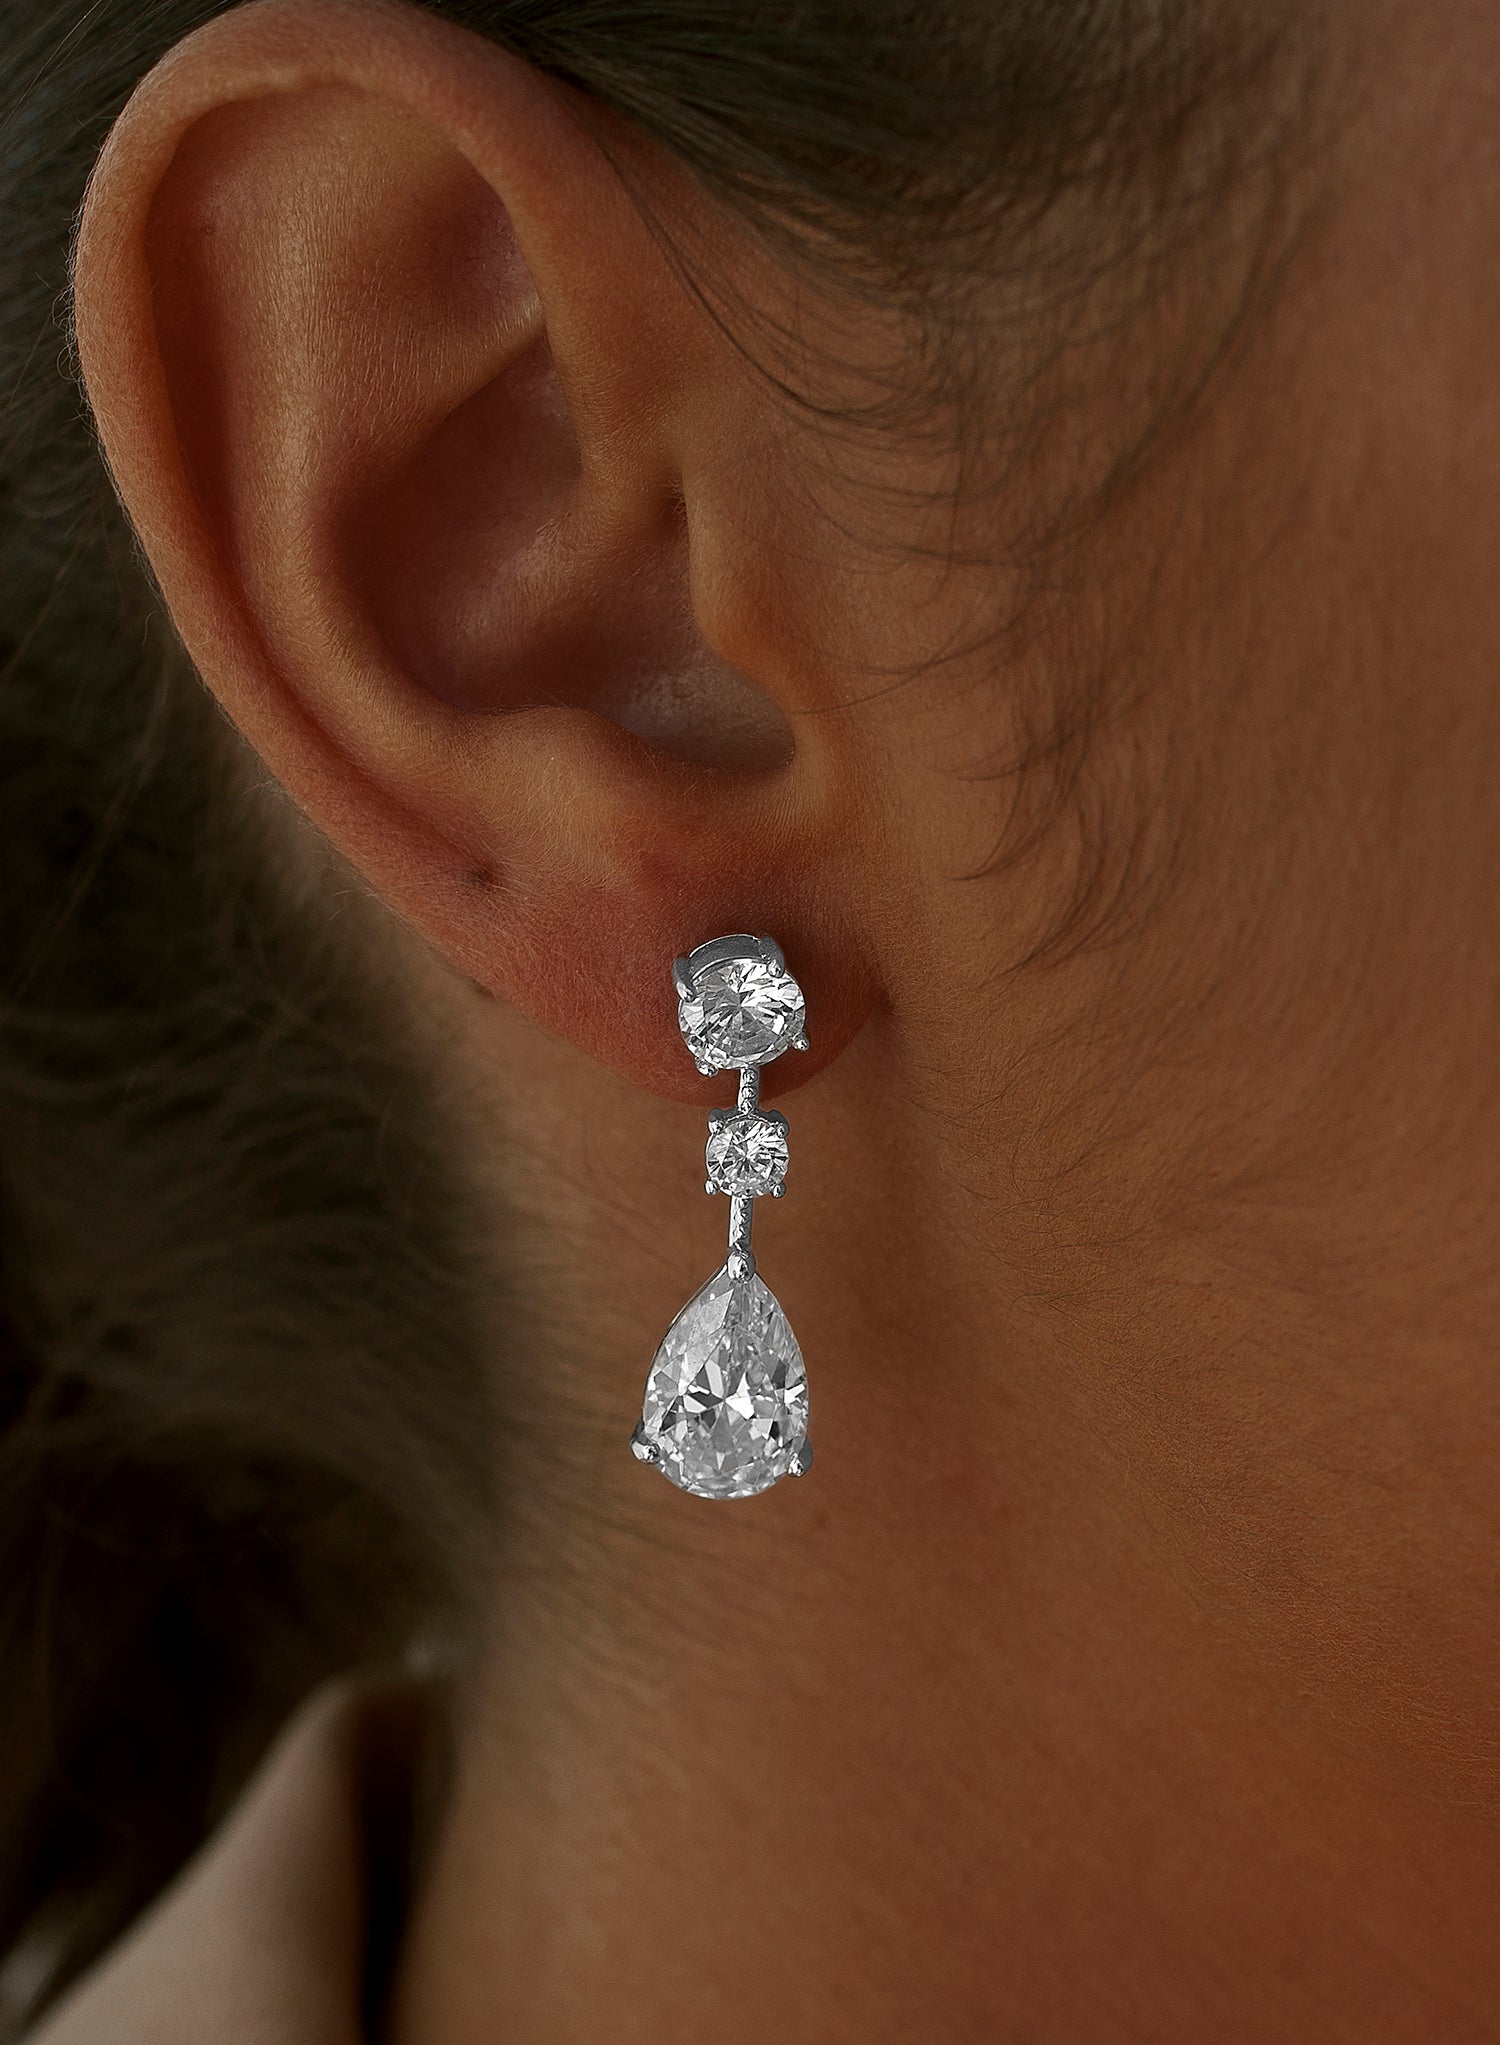 Small monochrome bridal earrings with zirconia stones